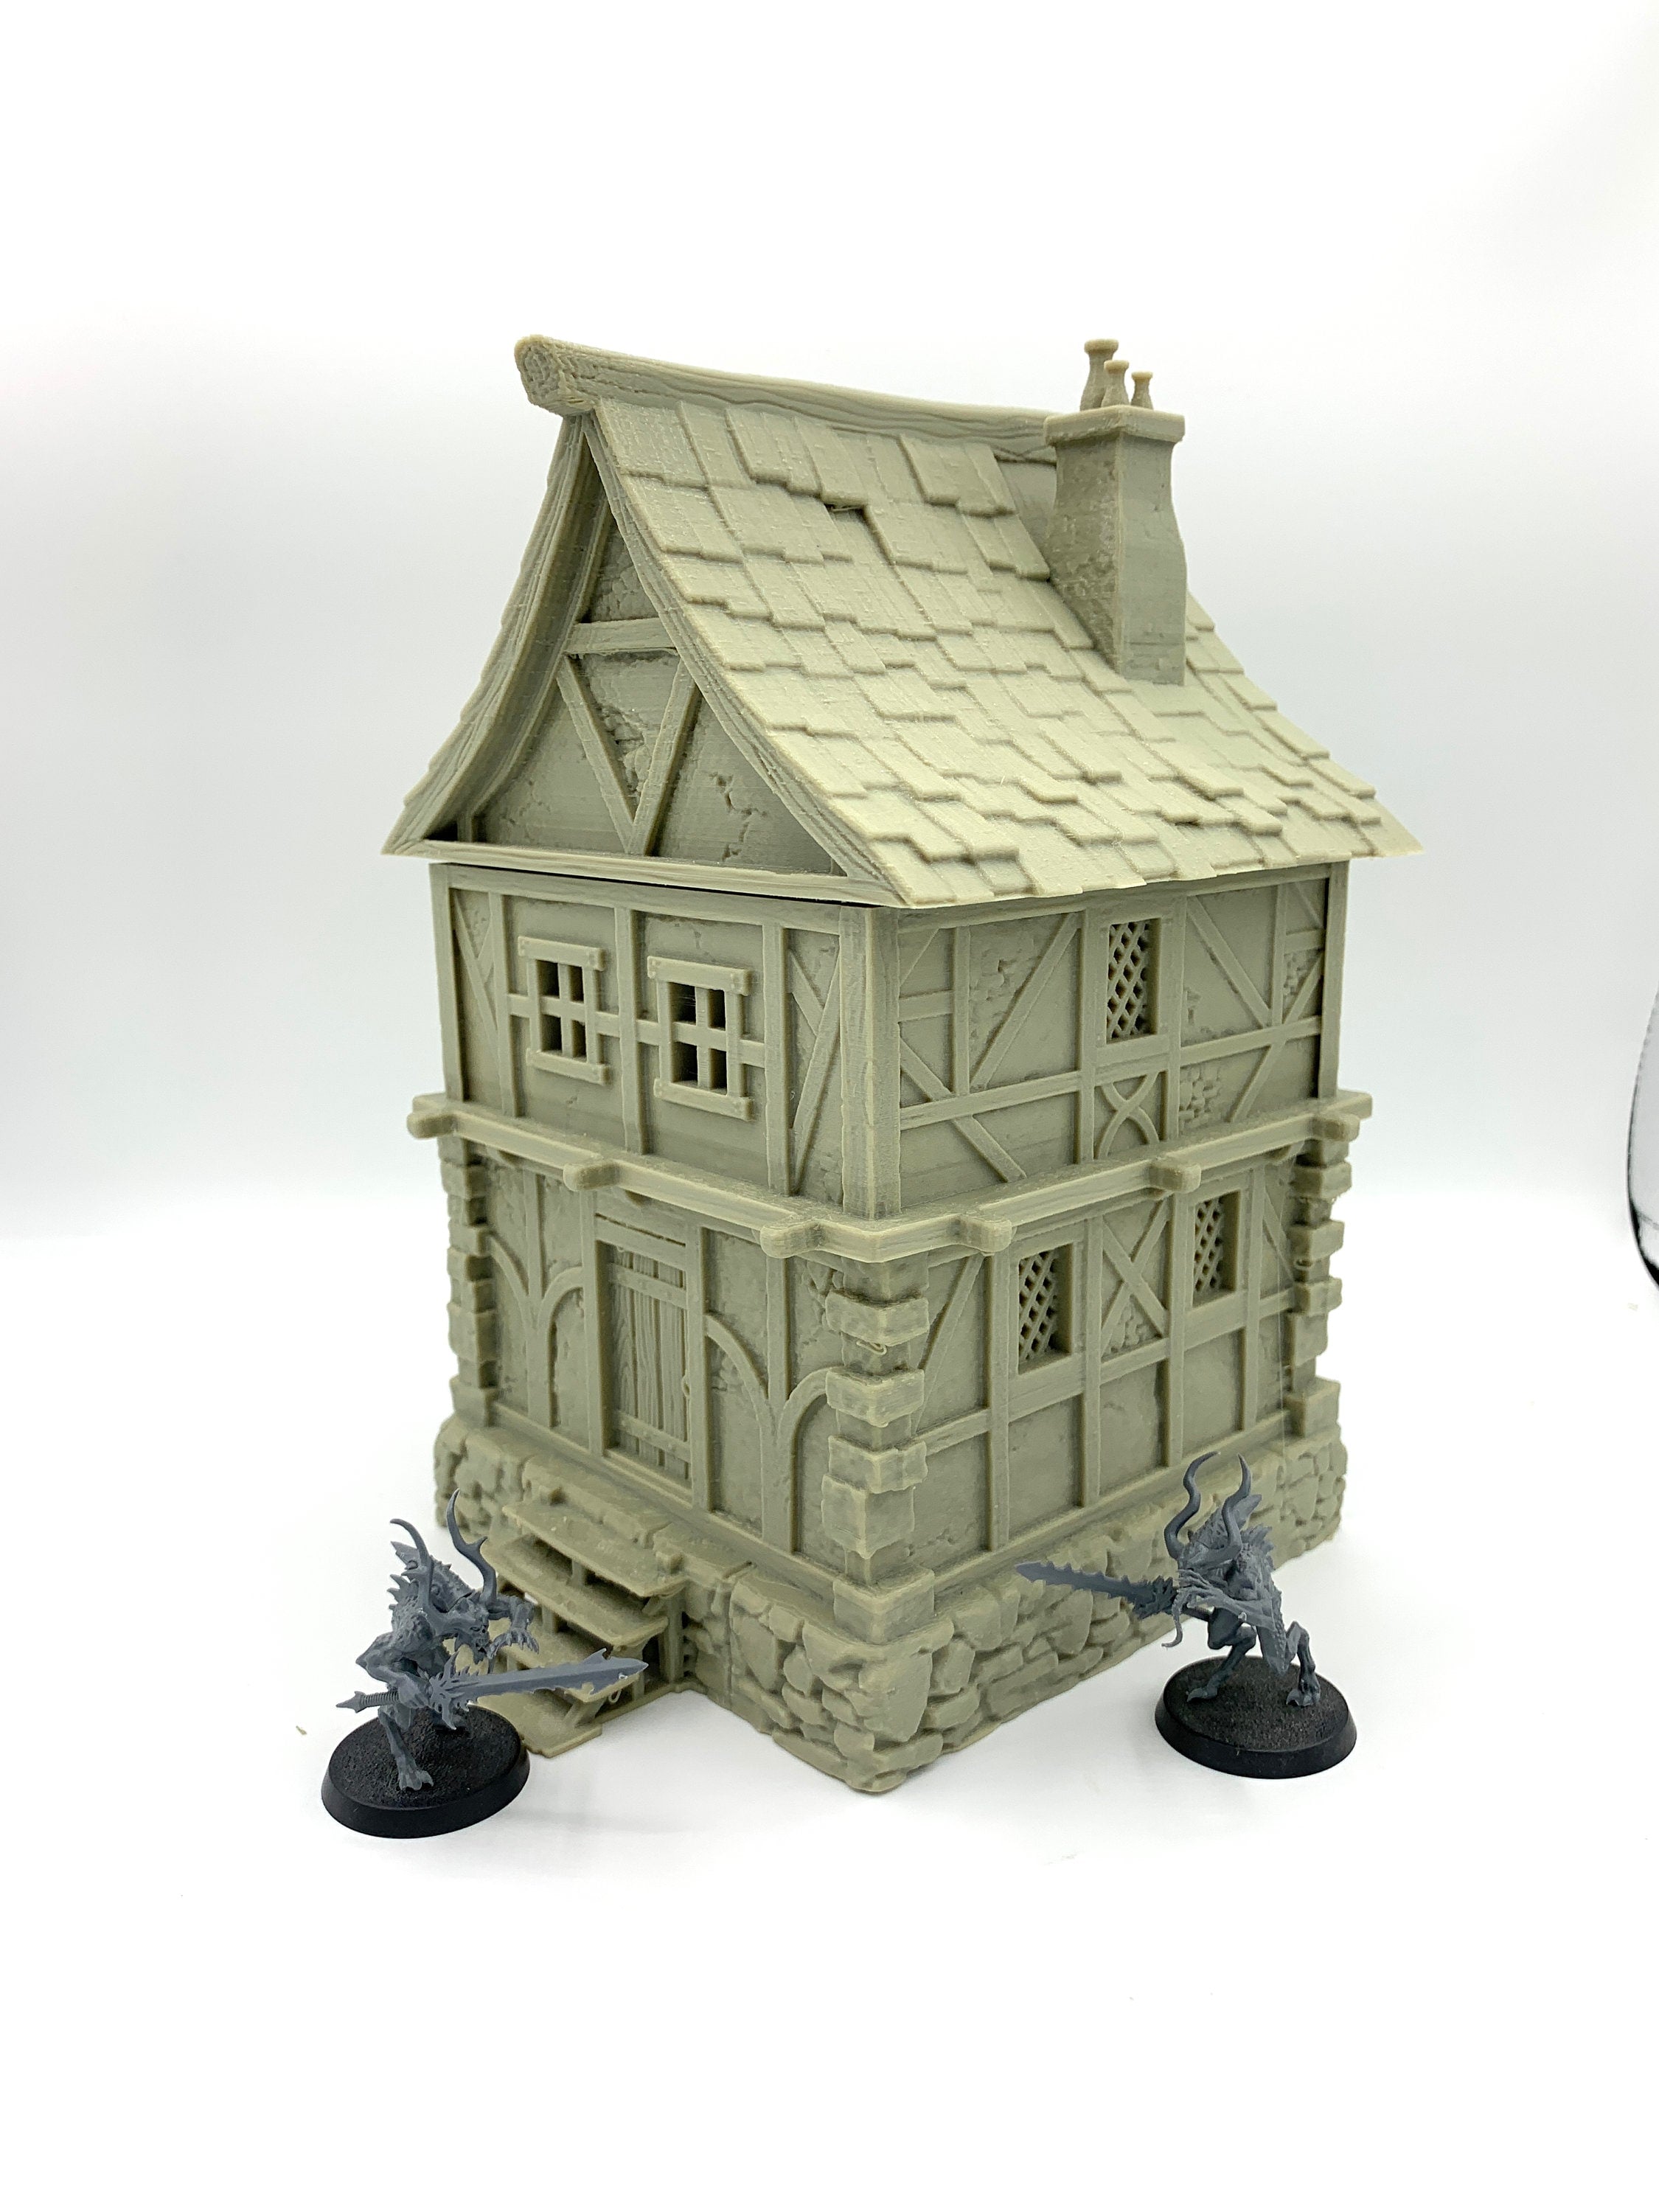 Tiradom House 2 / Kingdom of Tiradom Terrain / RPG and Wargame 3d Printed Tabletop Terrain / Licensed Printer